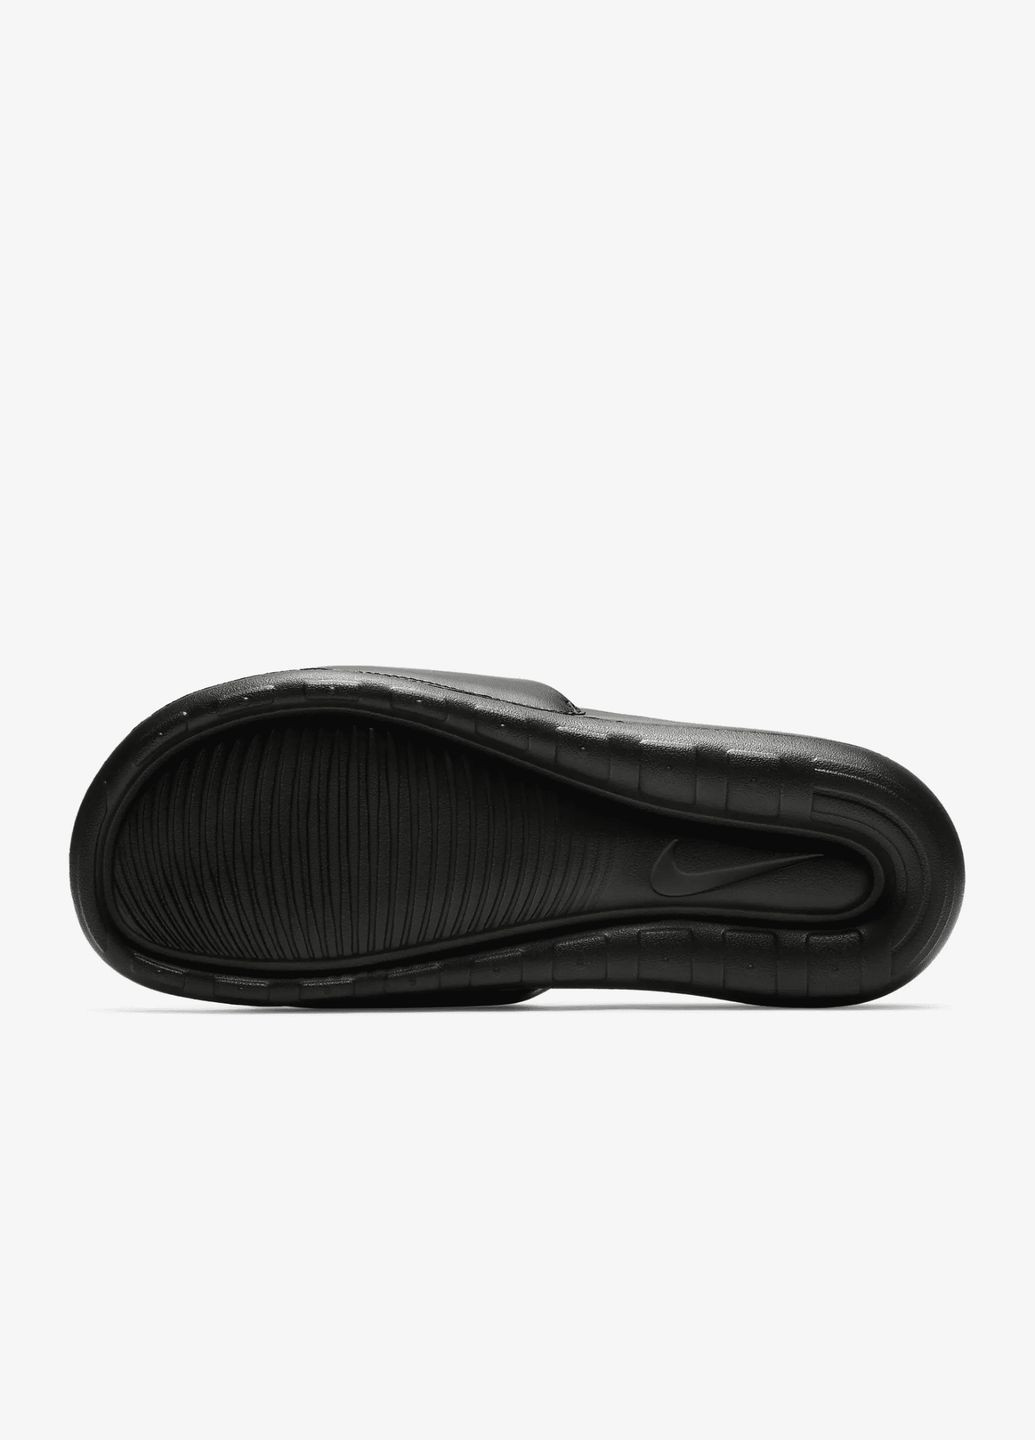 Черные мужские тапочки victori one nn slide cn9675-003 черные Nike